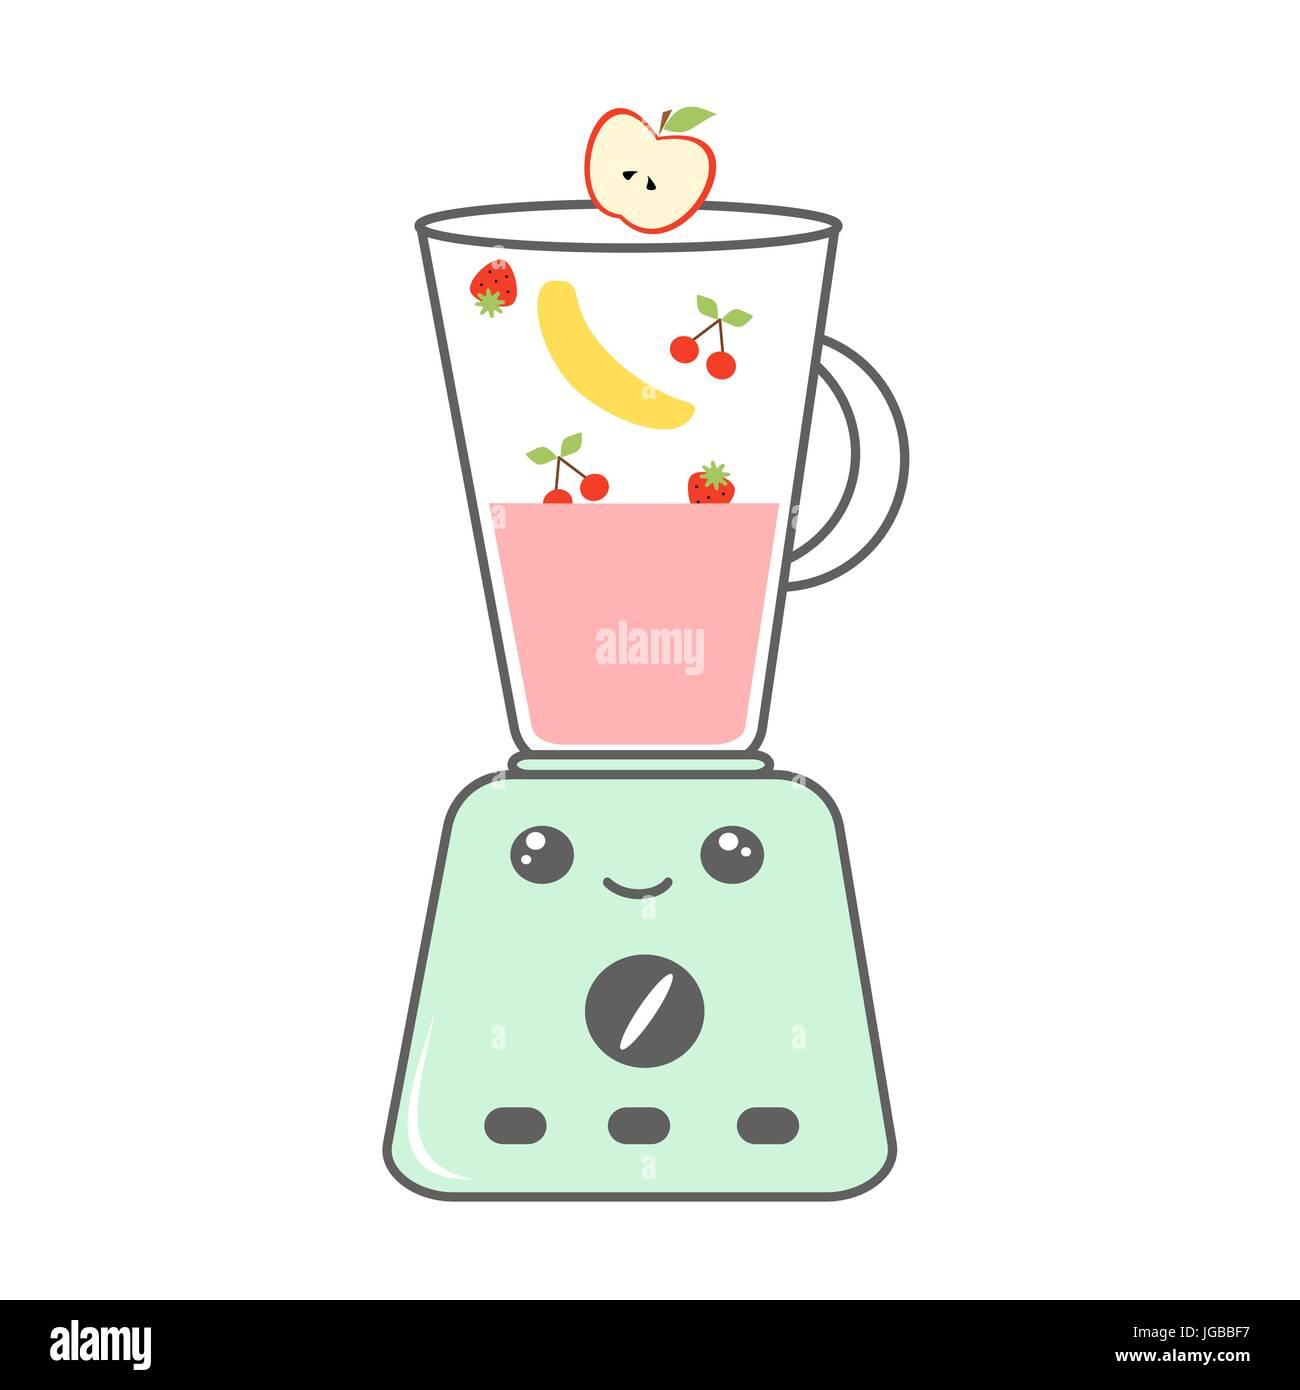 https://c8.alamy.com/comp/JGBBF7/cute-cartoon-blender-with-fruits-funny-vector-illustration-isolated-JGBBF7.jpg